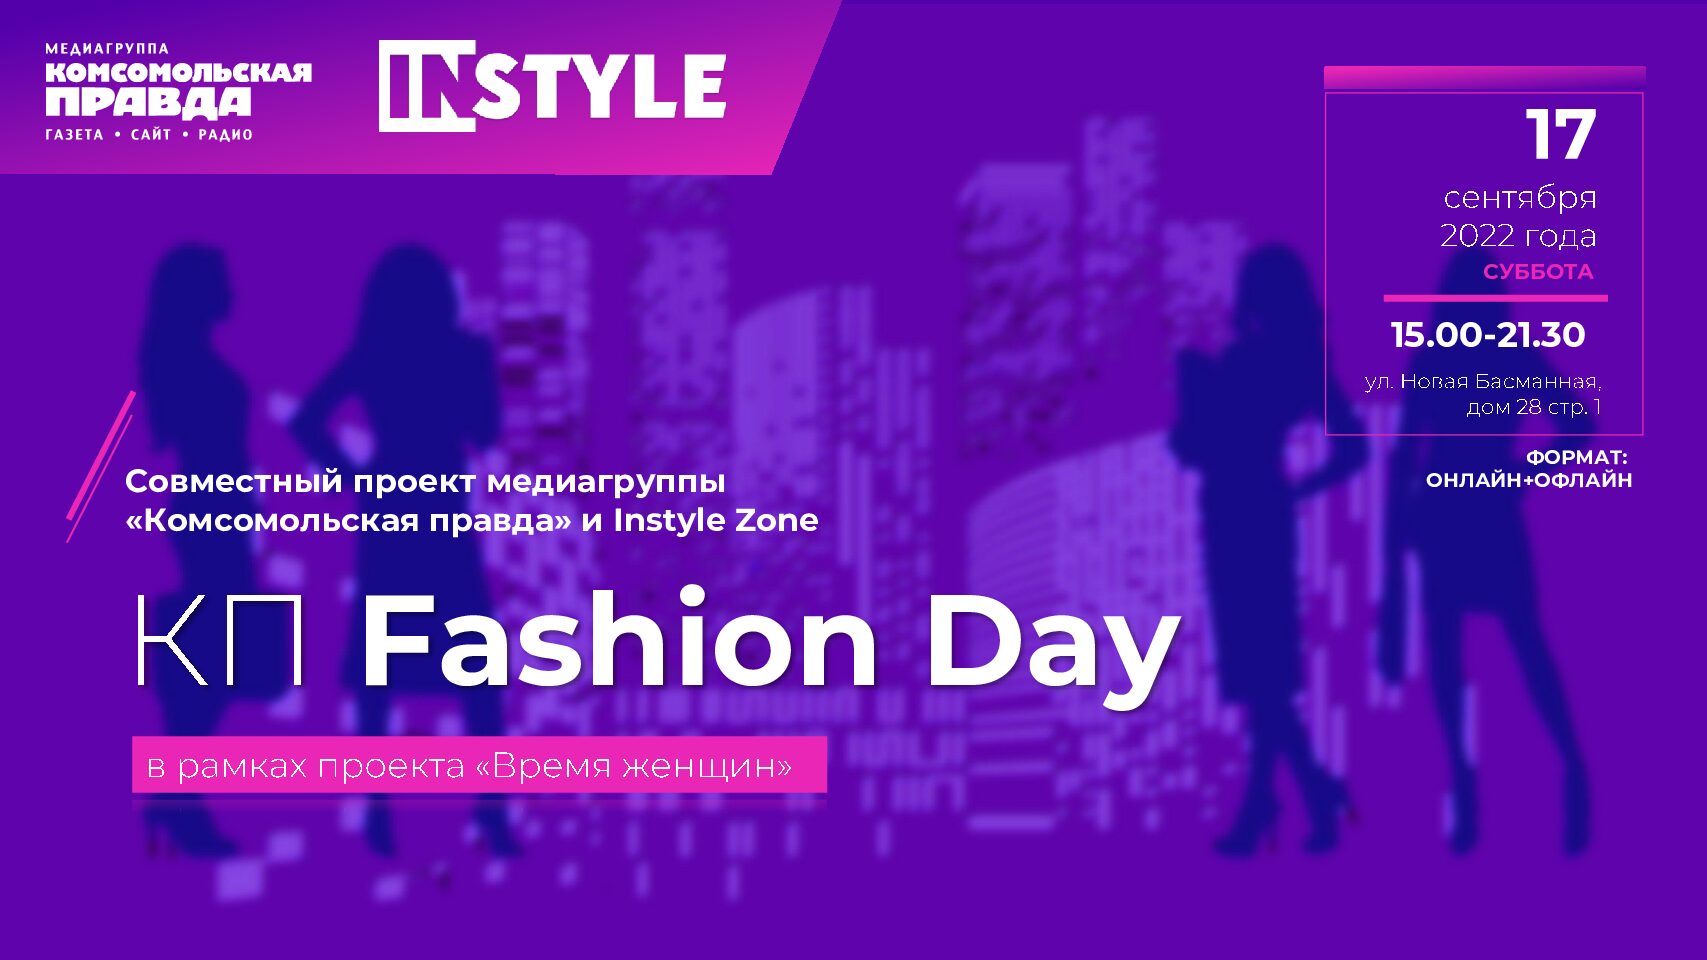 КП Fashion day, 17 сентября 2022